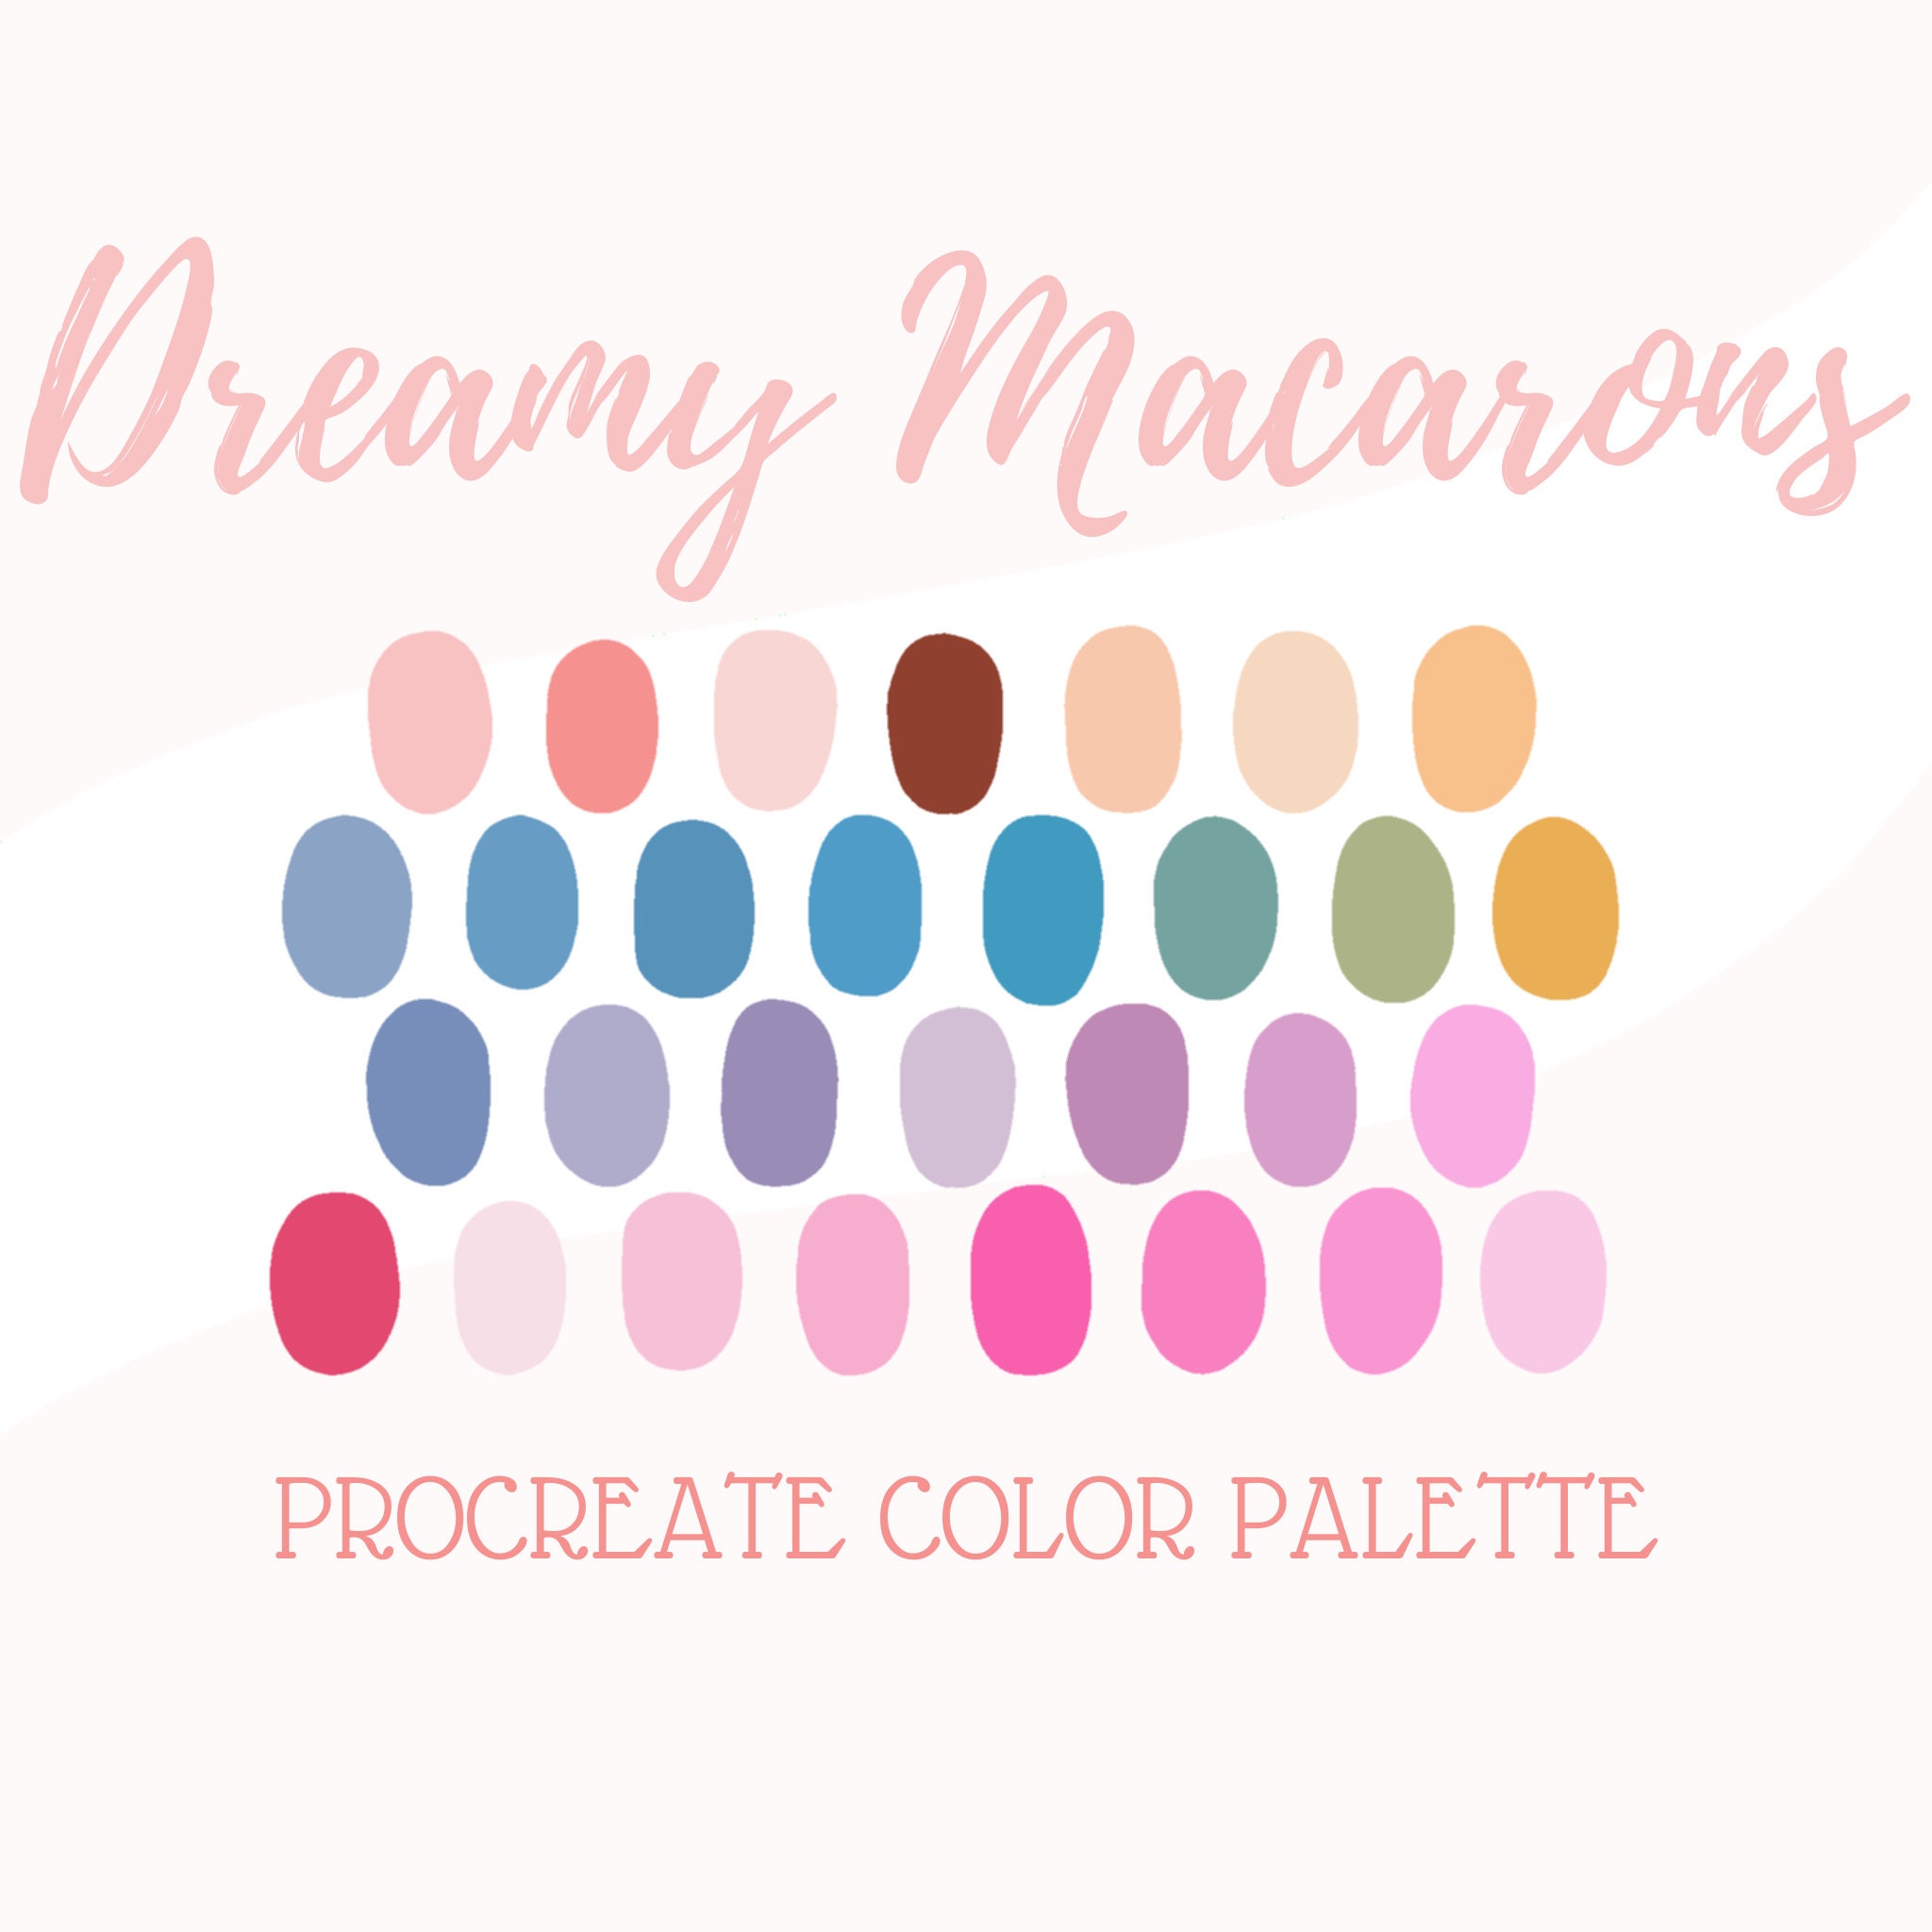 Procreate Color Palette Dreamy Macarons - Etsy